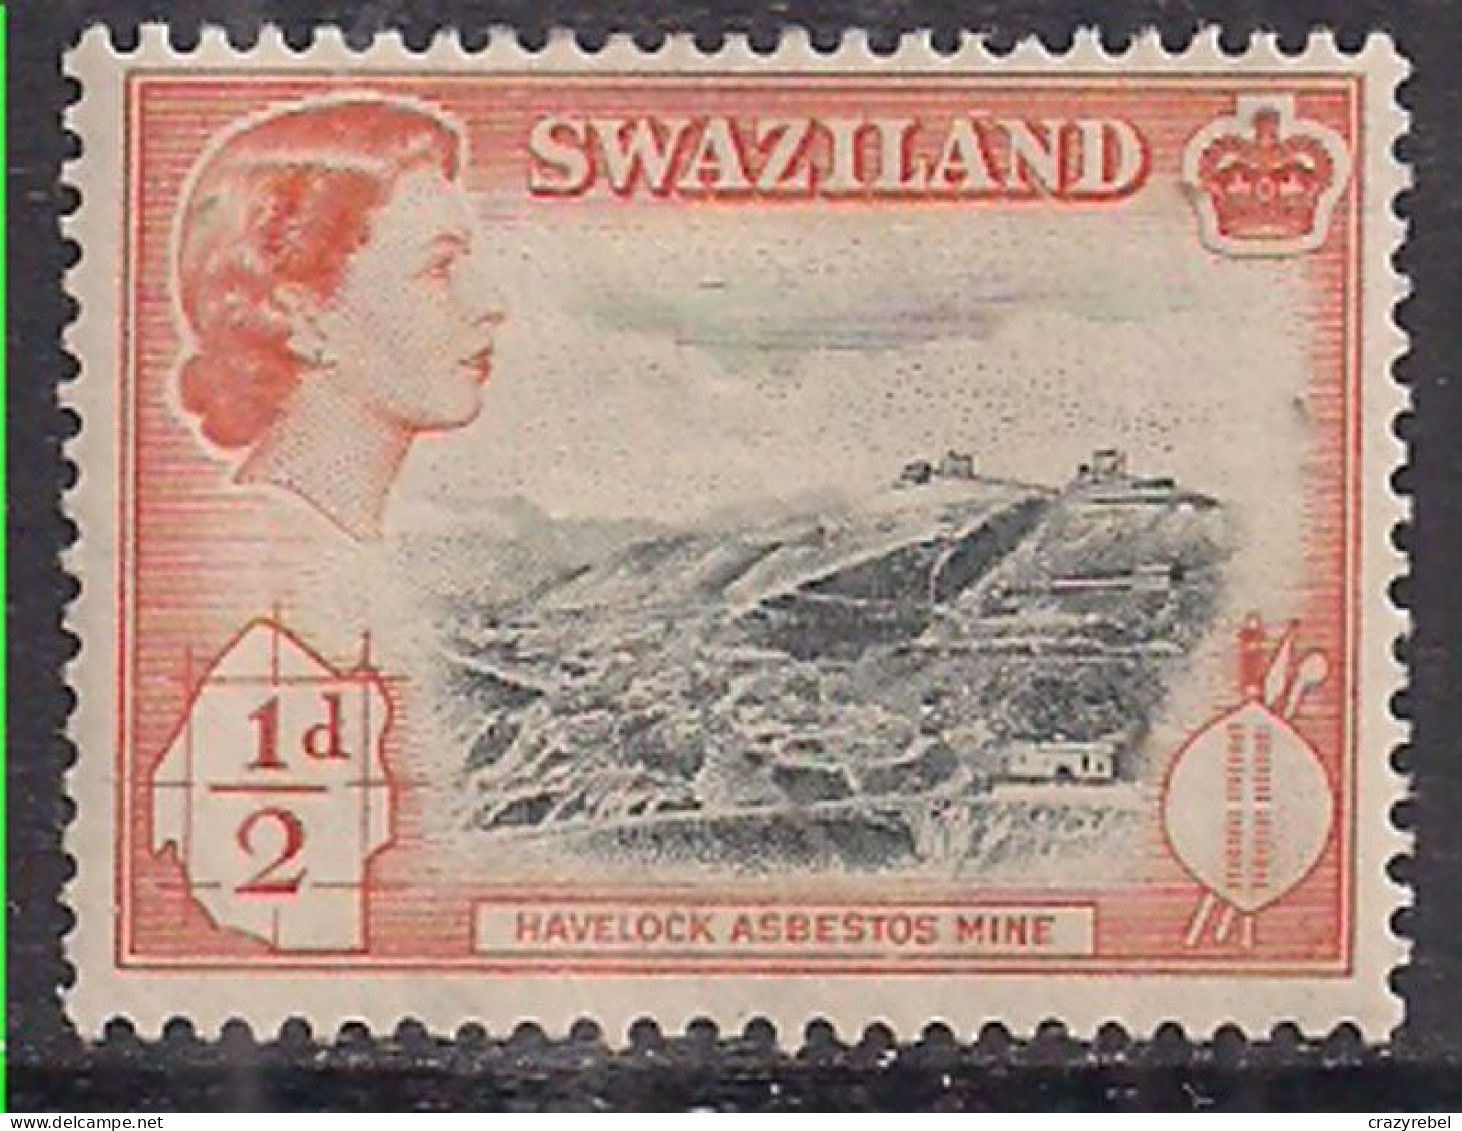 Swaziland 1956 QE2 1/2d Havelock Asbestos Mine MH SG 53 ( L772 ) - Swaziland (...-1967)